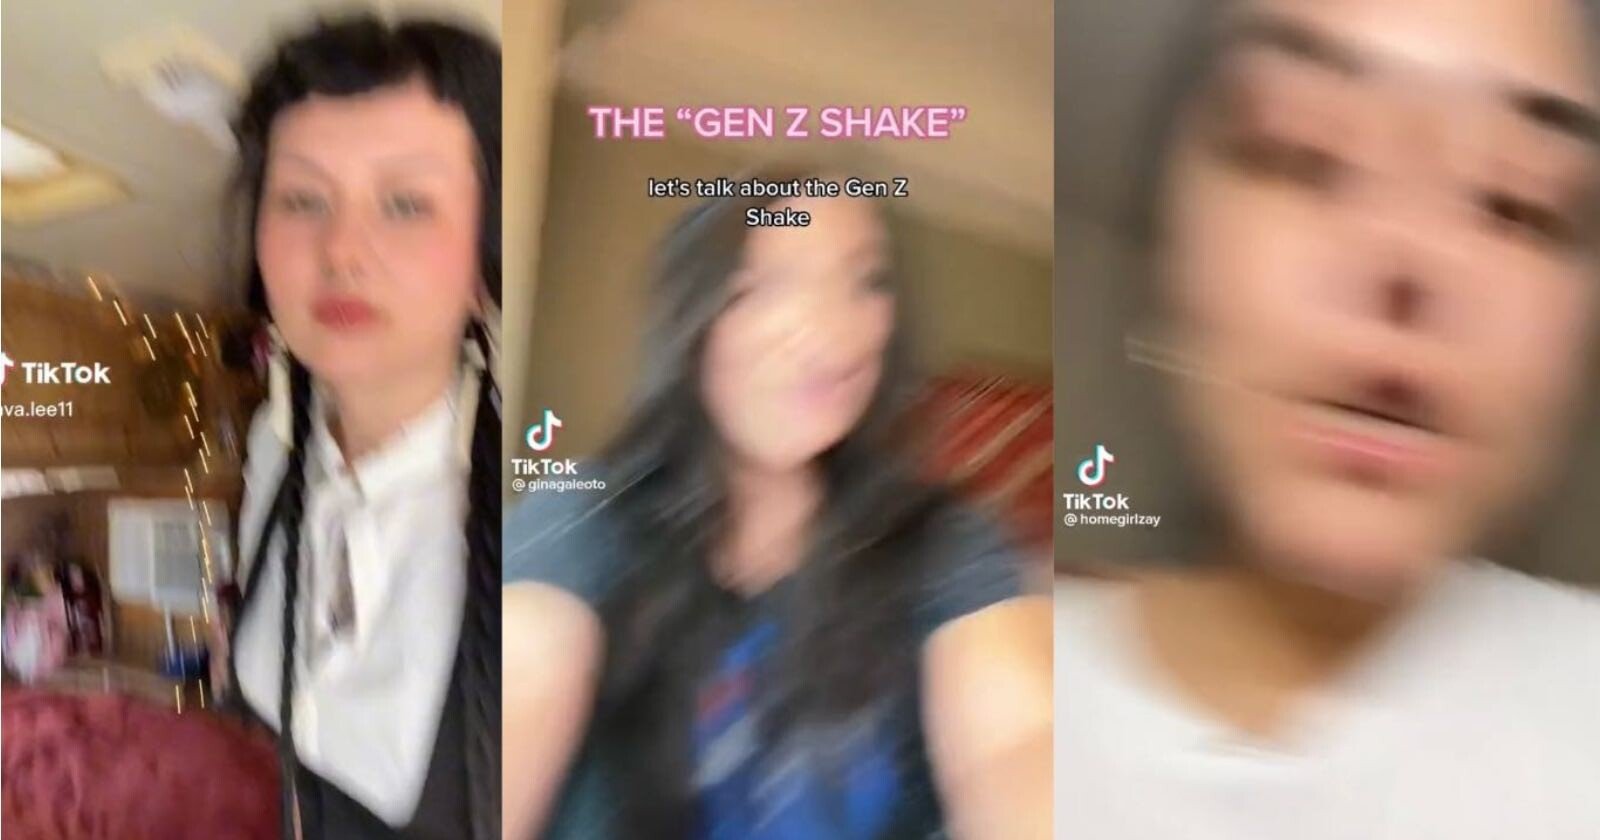  gen shake telltale way young people 